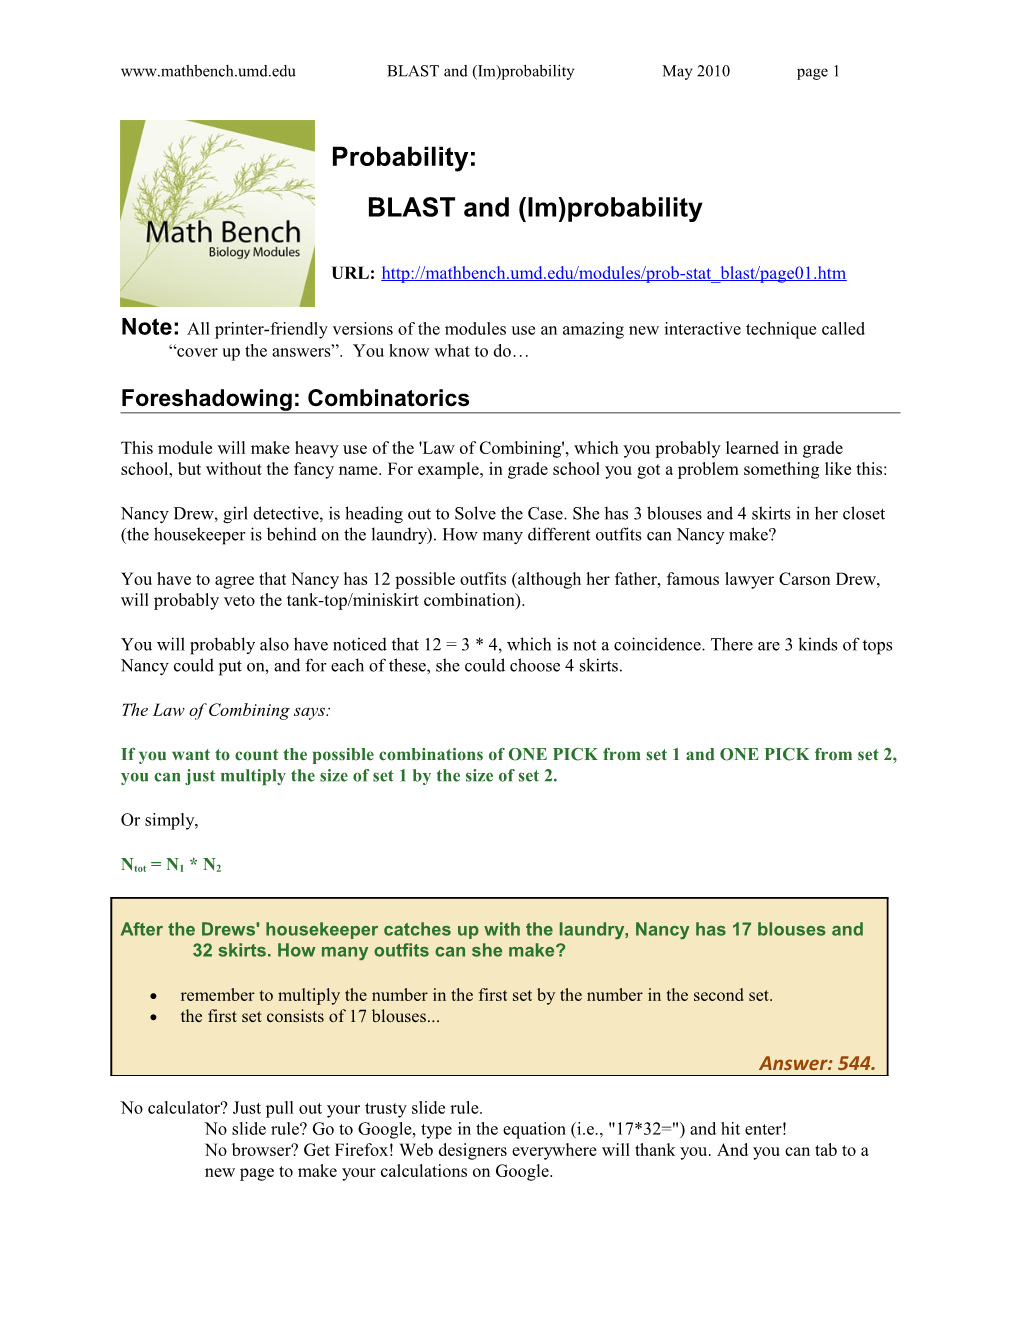 BLAST and (Im)Probability